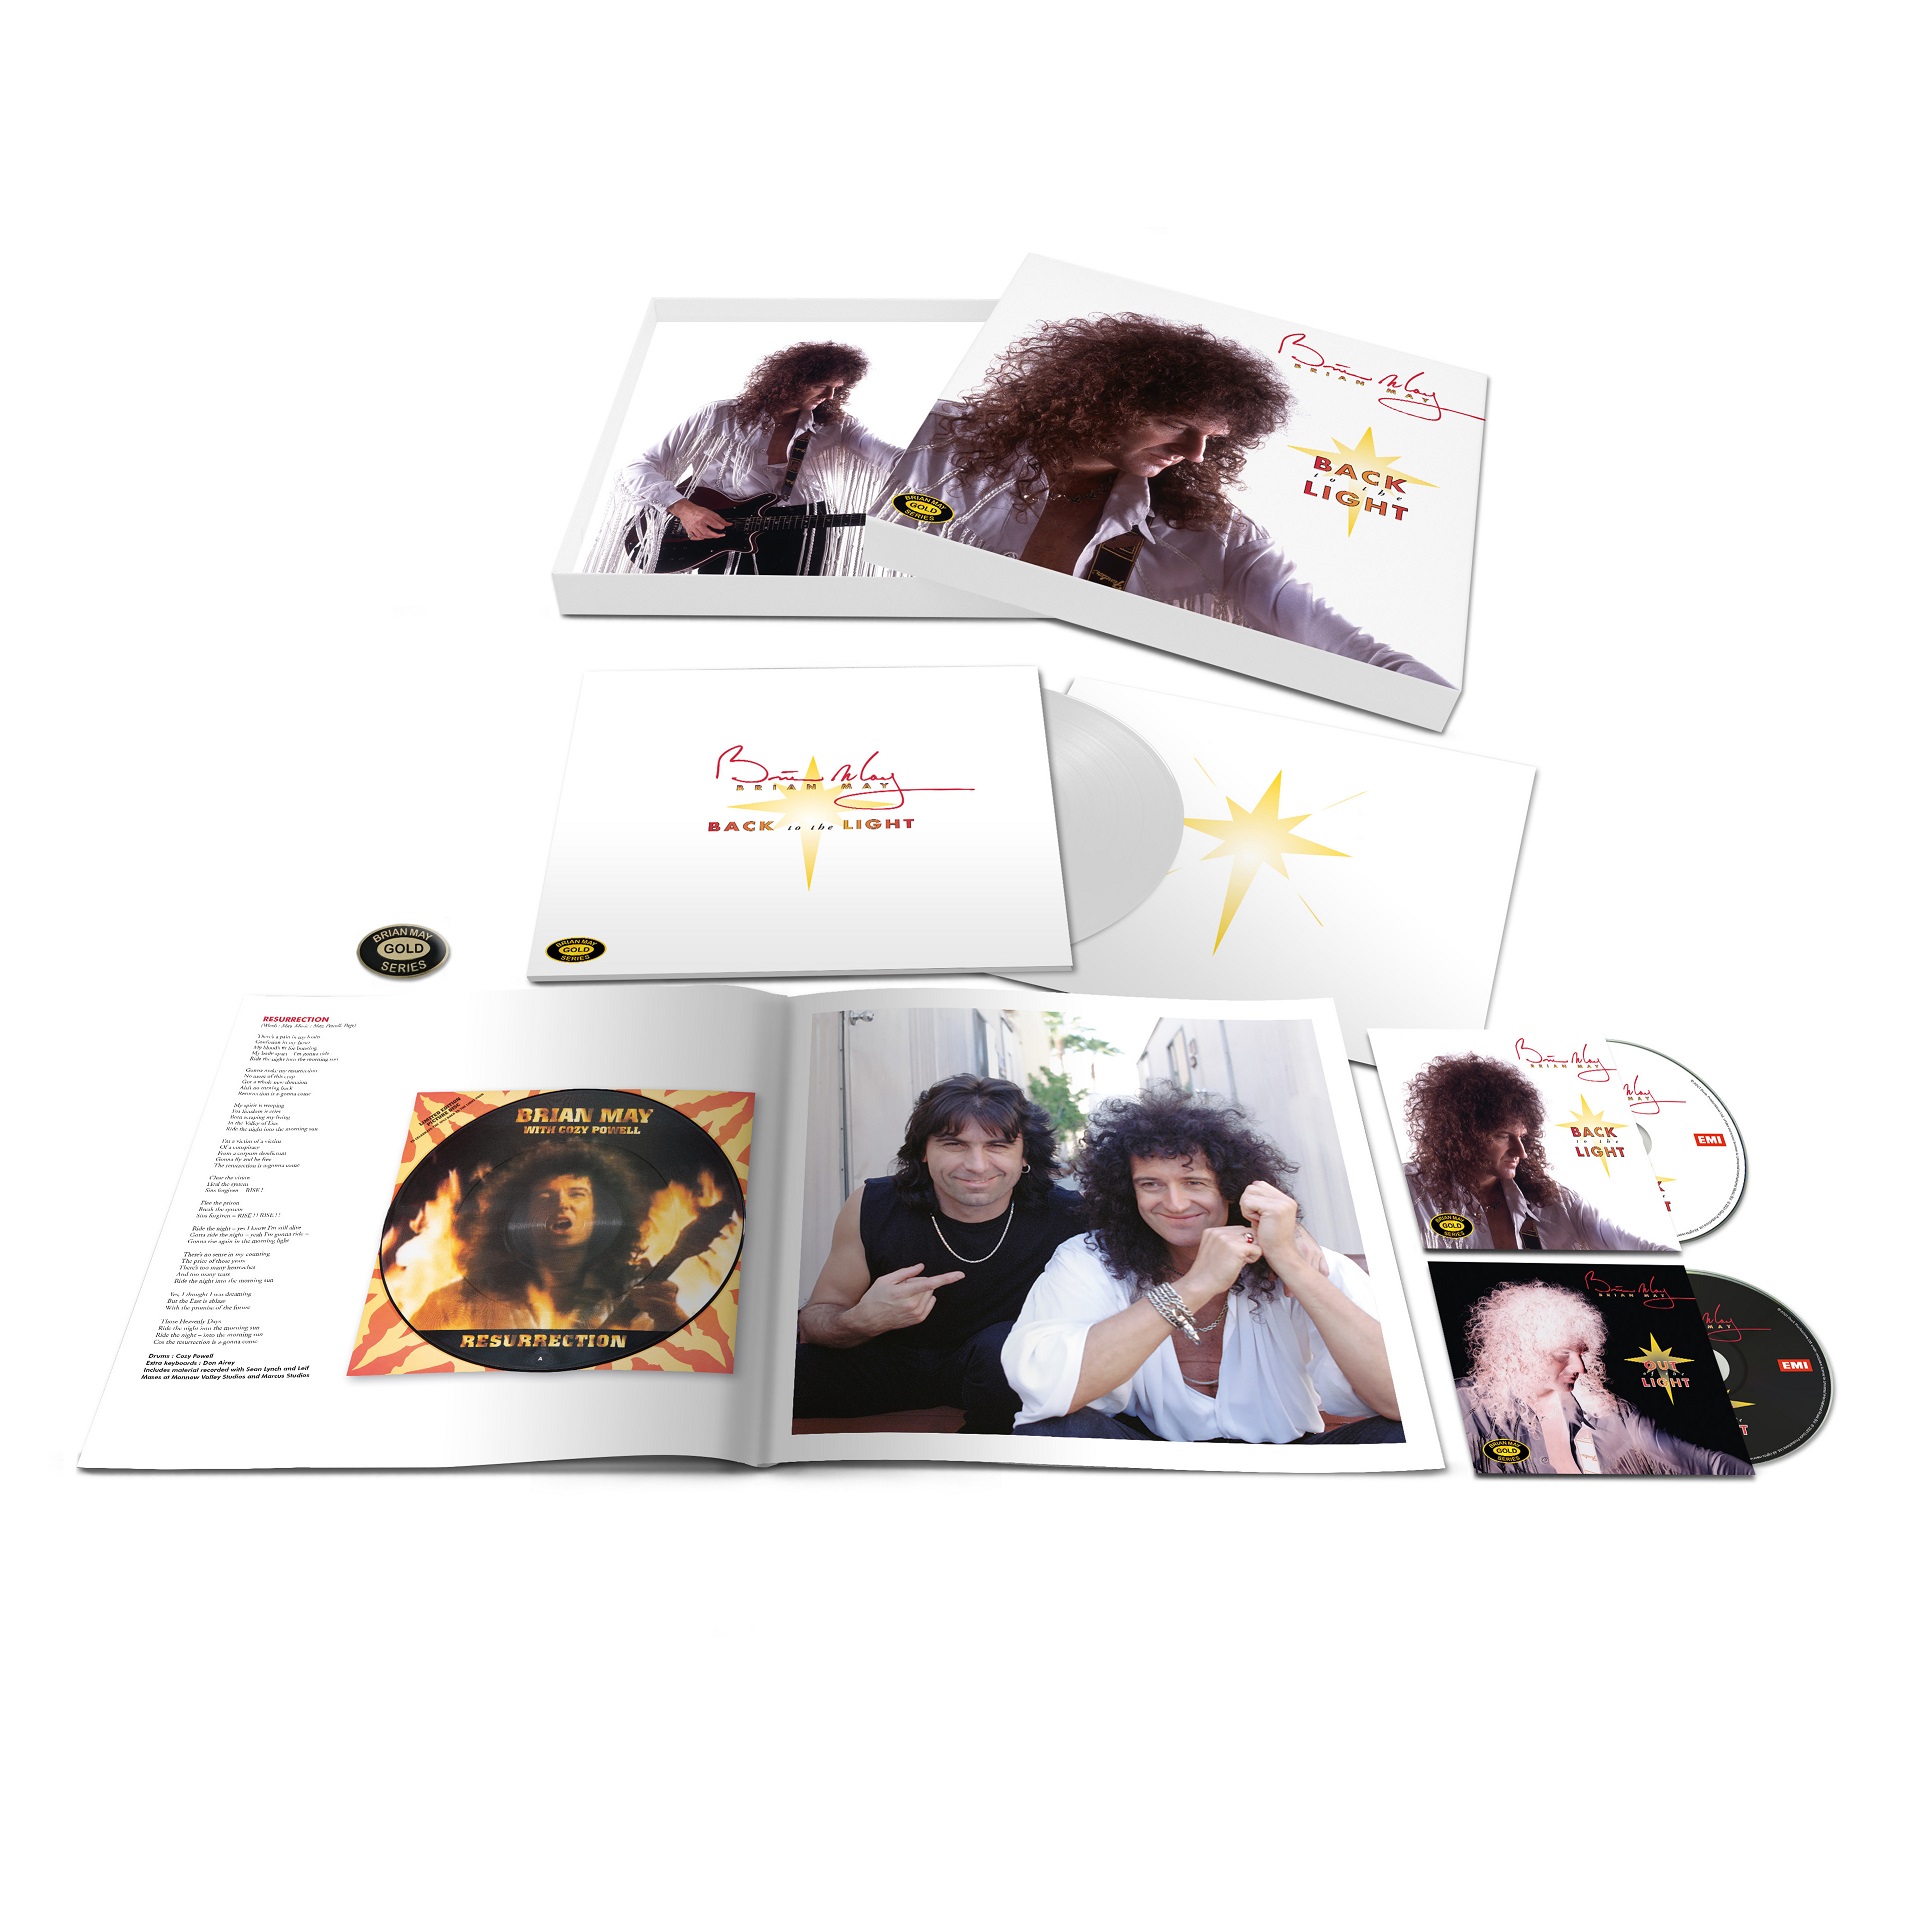 Brian May (브라이언 메이) - 1집 Back to the Light [화이트 컬러 LP+2CD] 